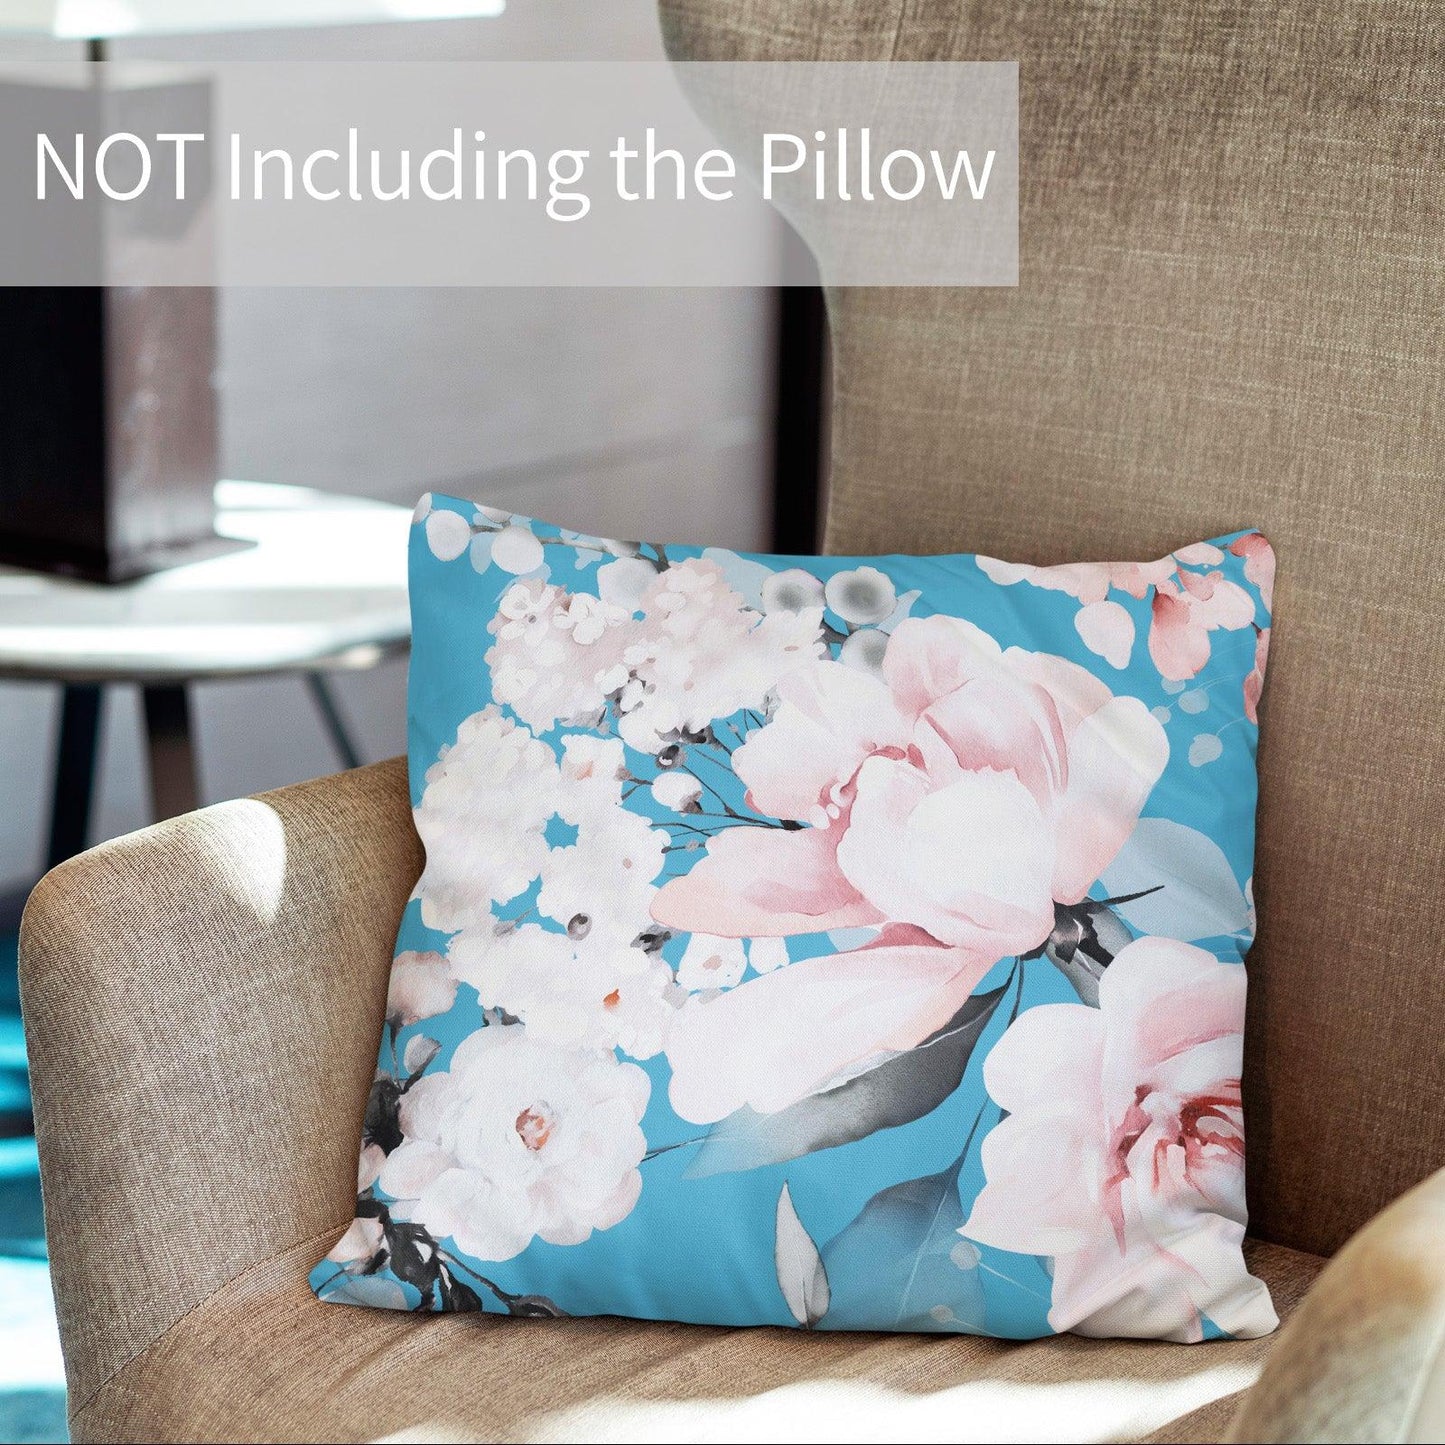 Modern Flower Throw Pillow Covers Pack of 2 18x18 Inch (White Peony) - Berkin Arts